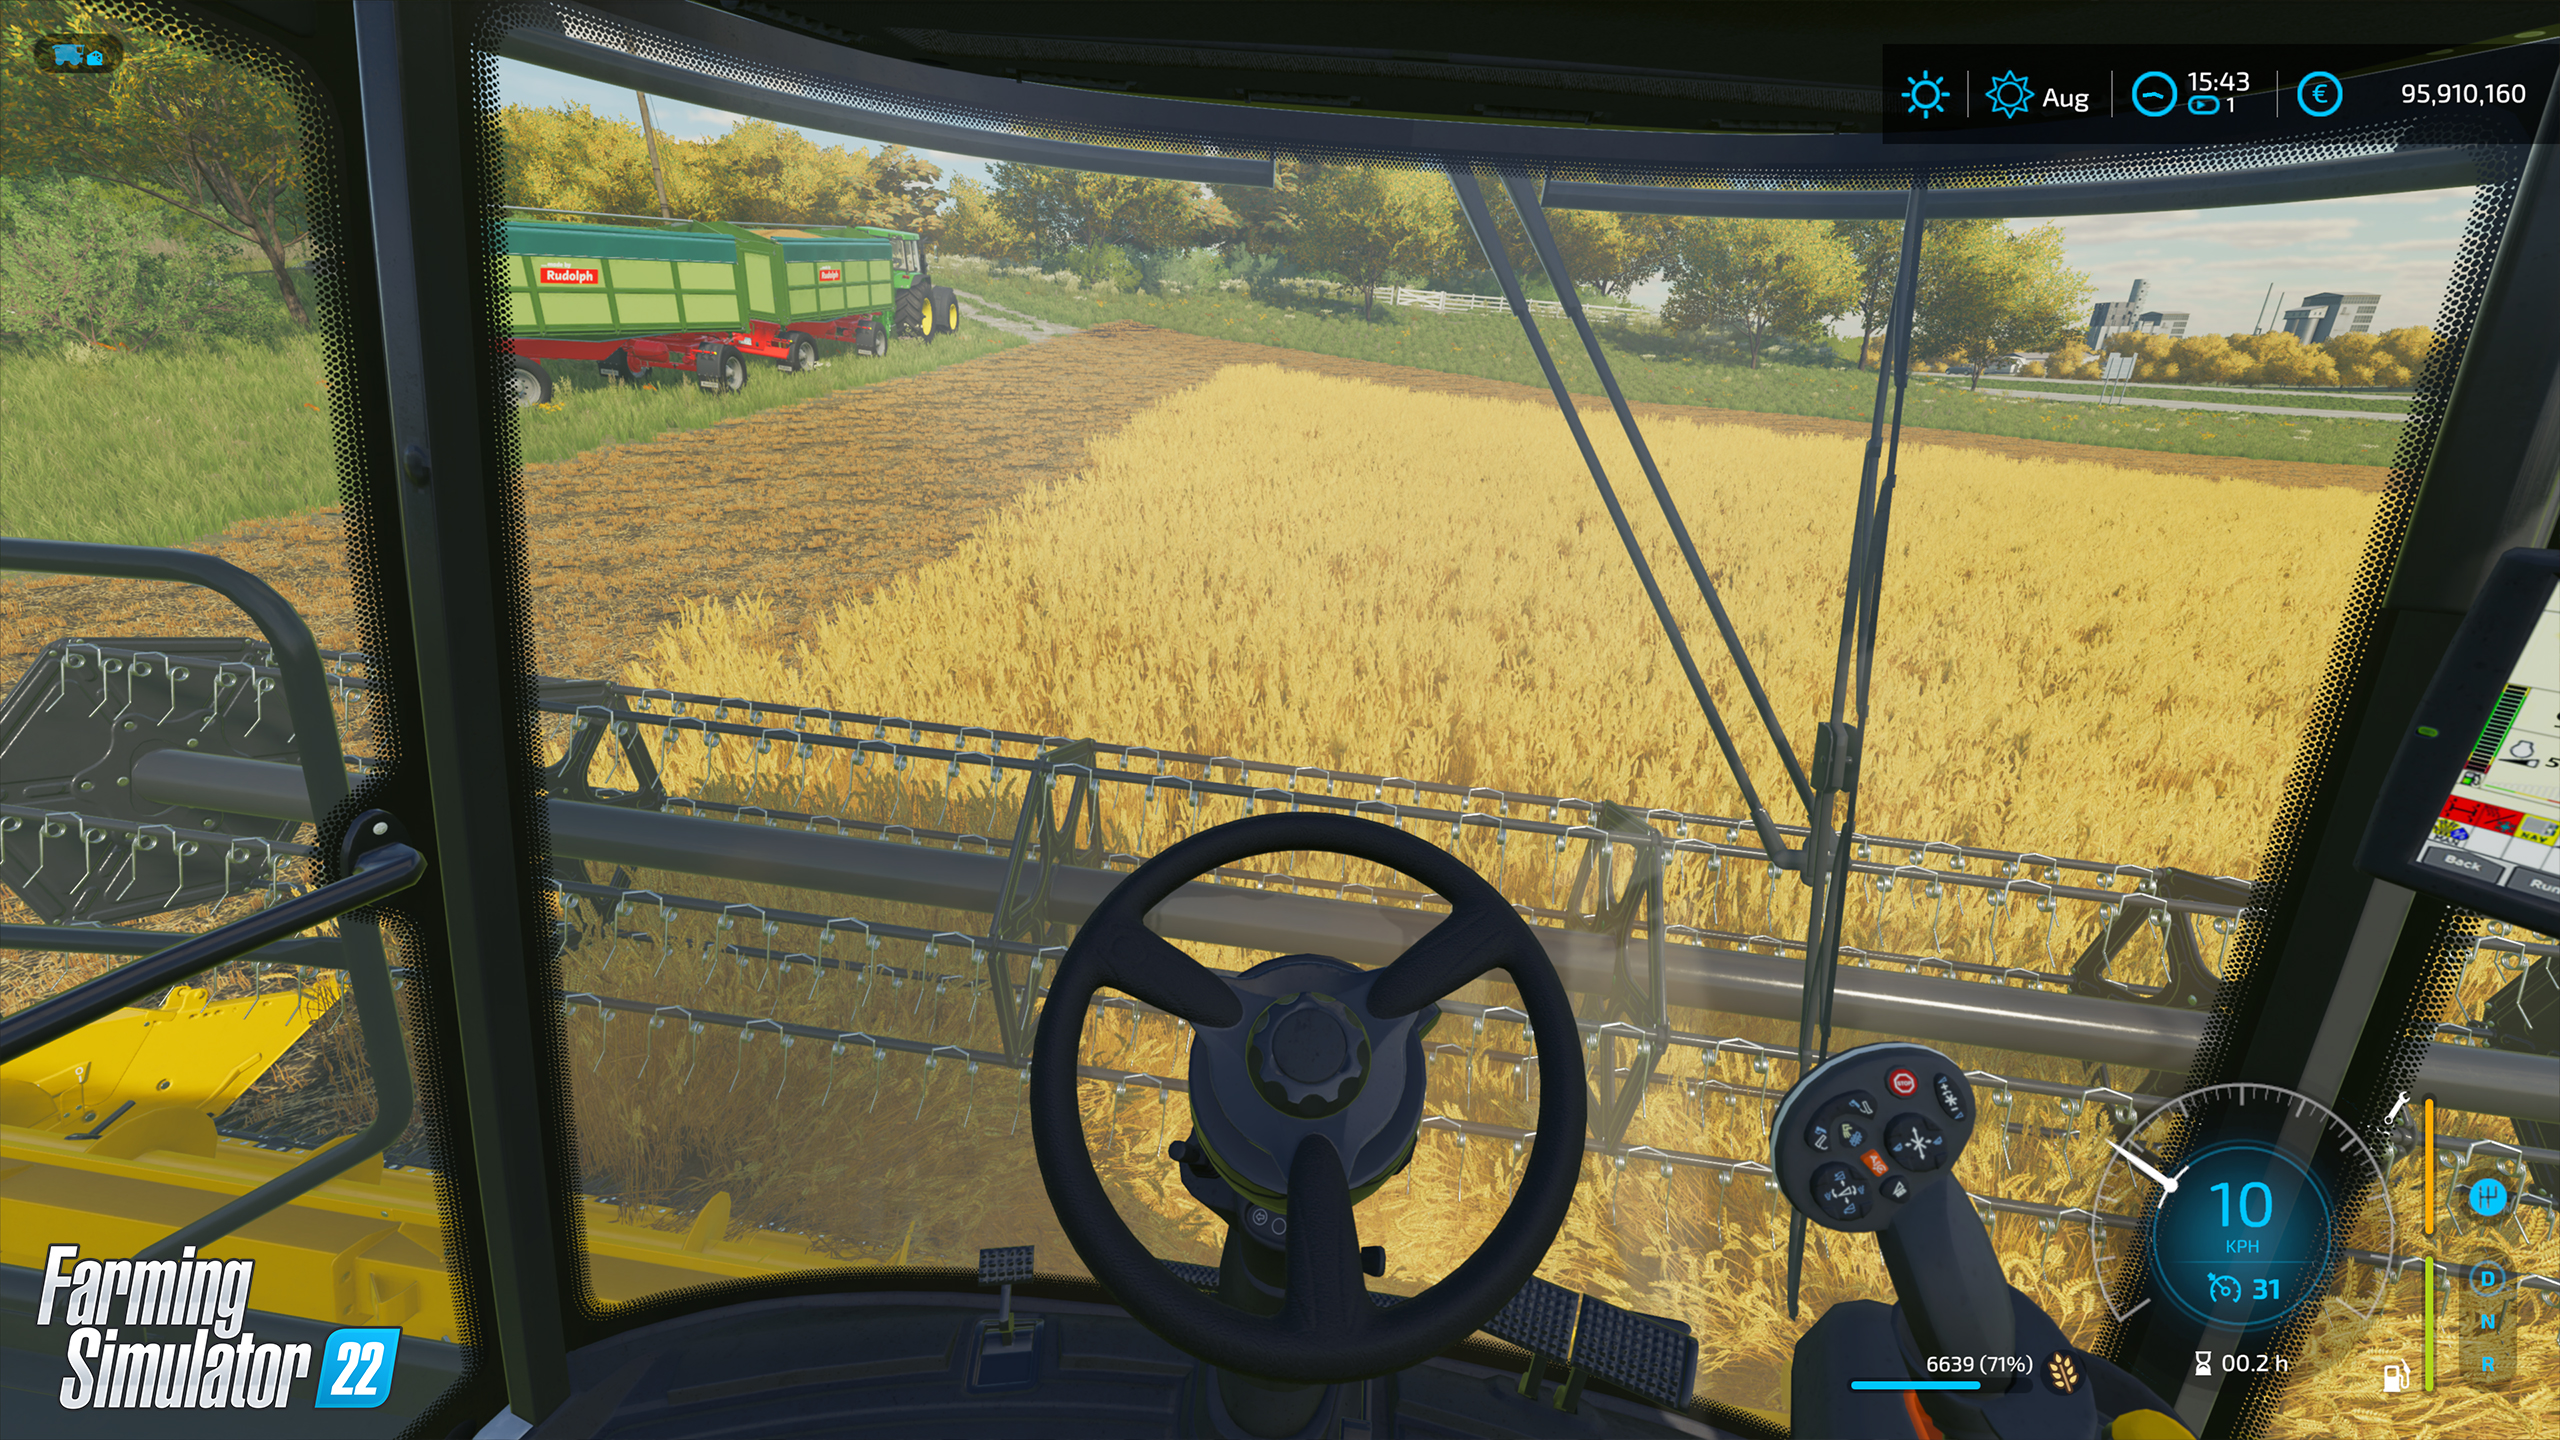 Premières scènes de gameplay en direct de Farming Simulator 22 